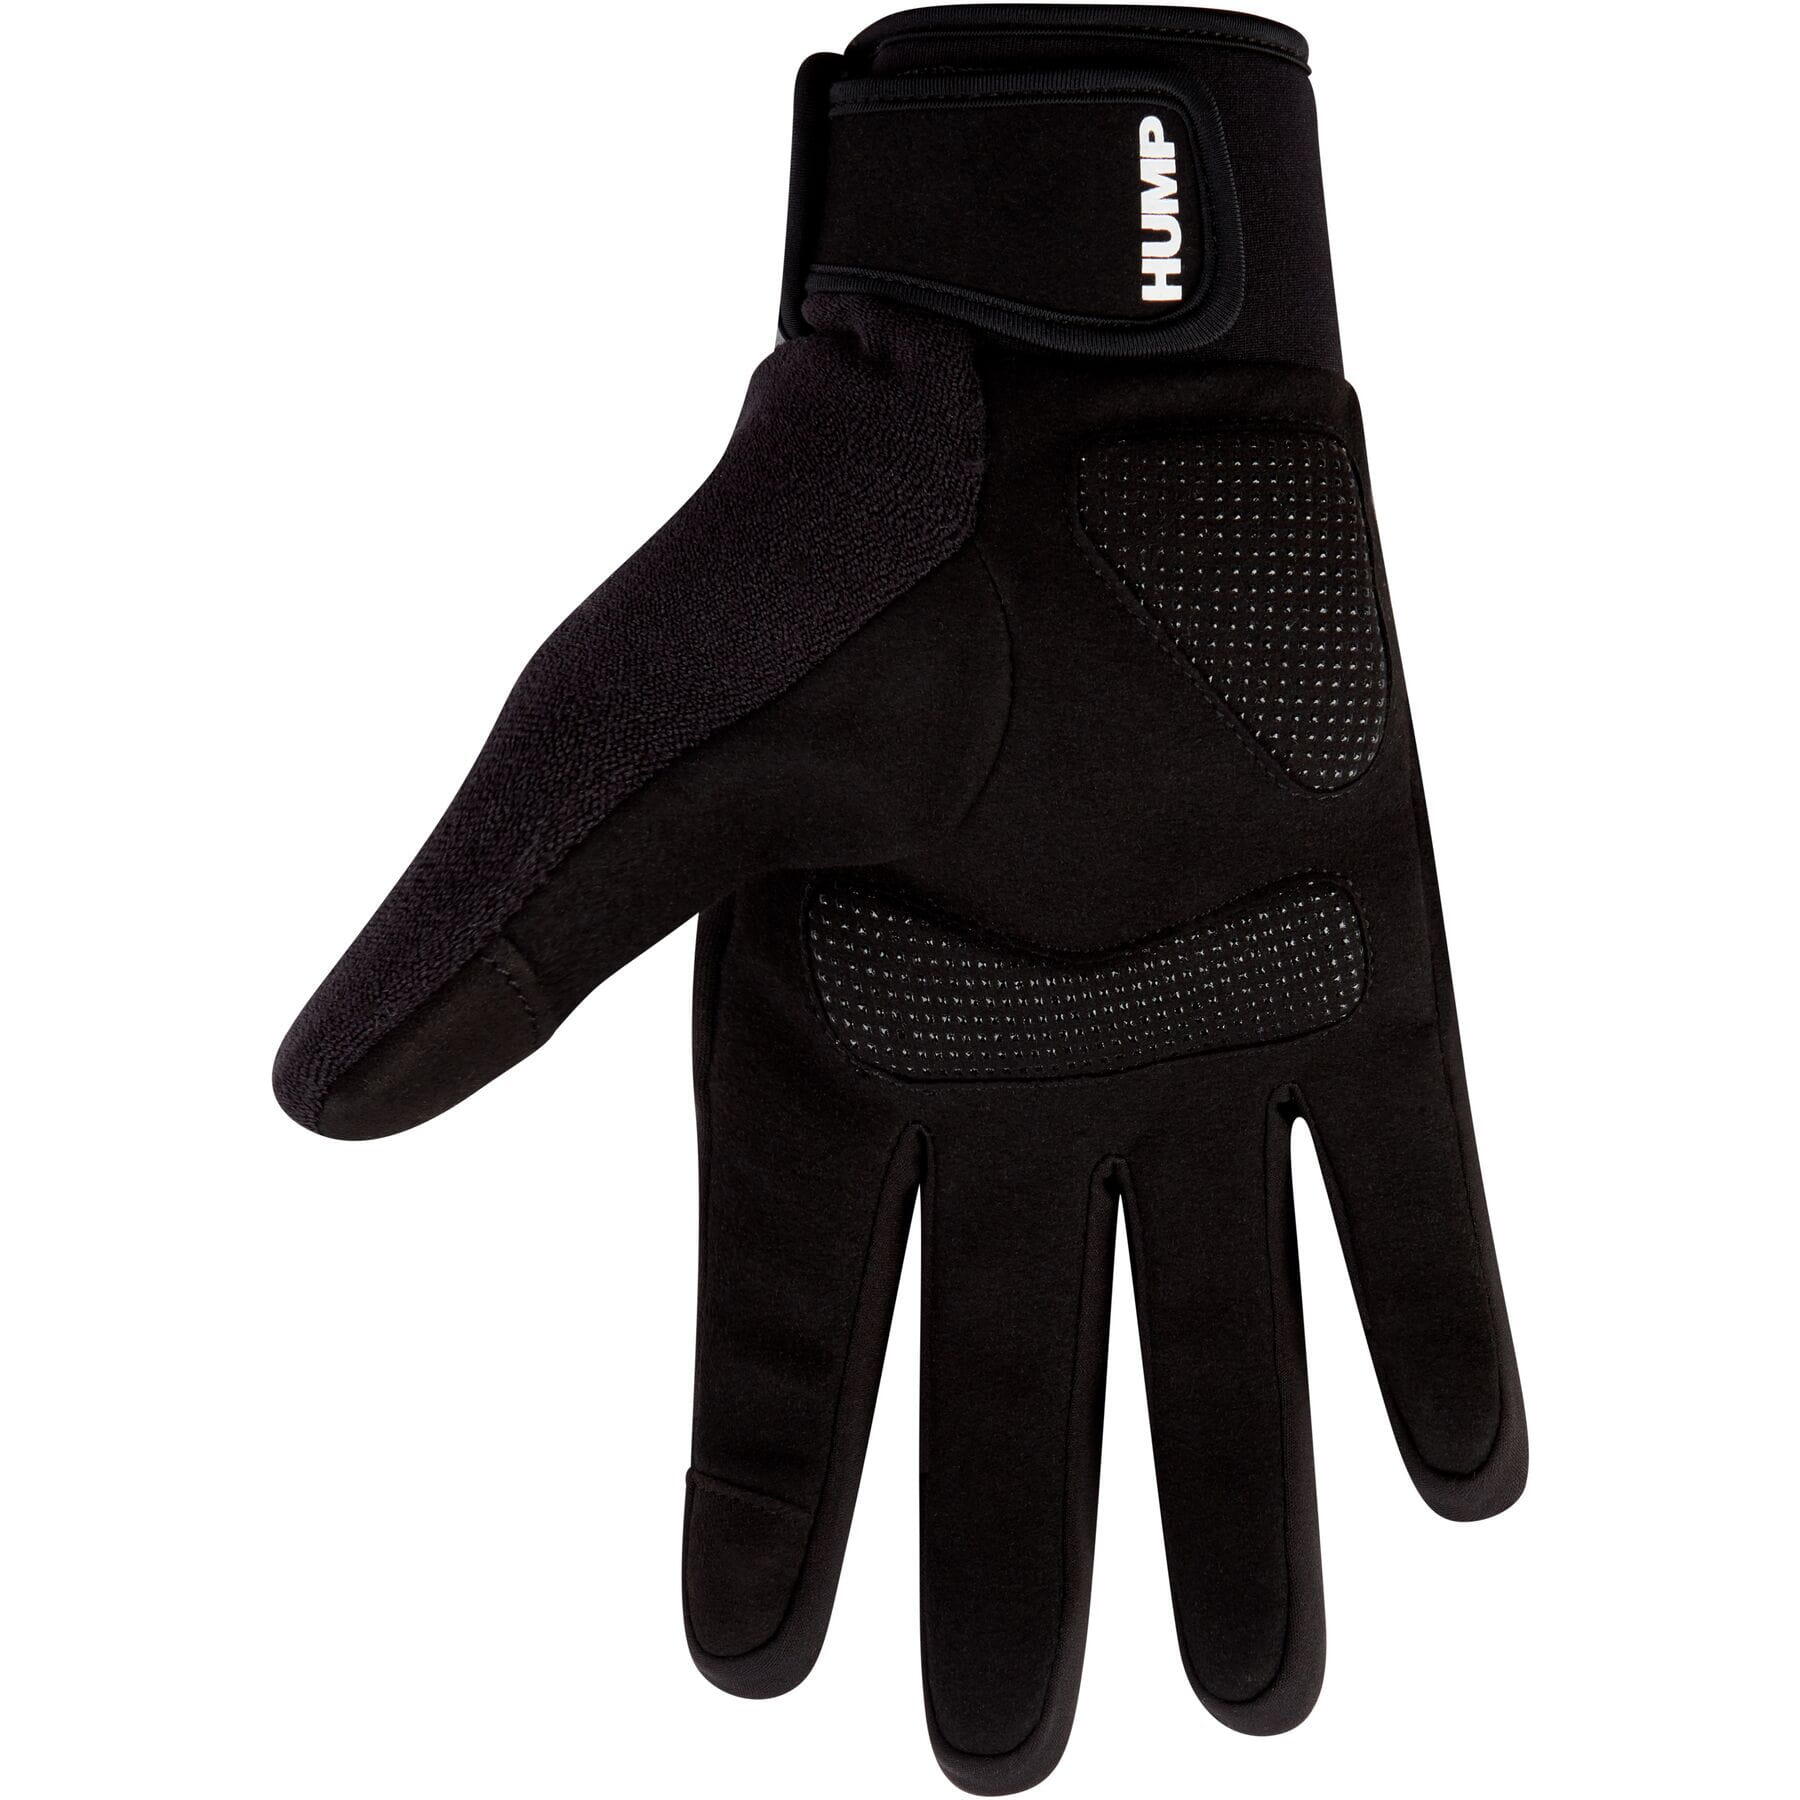 HUMP Ultra Reflective Waterproof Glove - Reflective Silver - Large 2/2